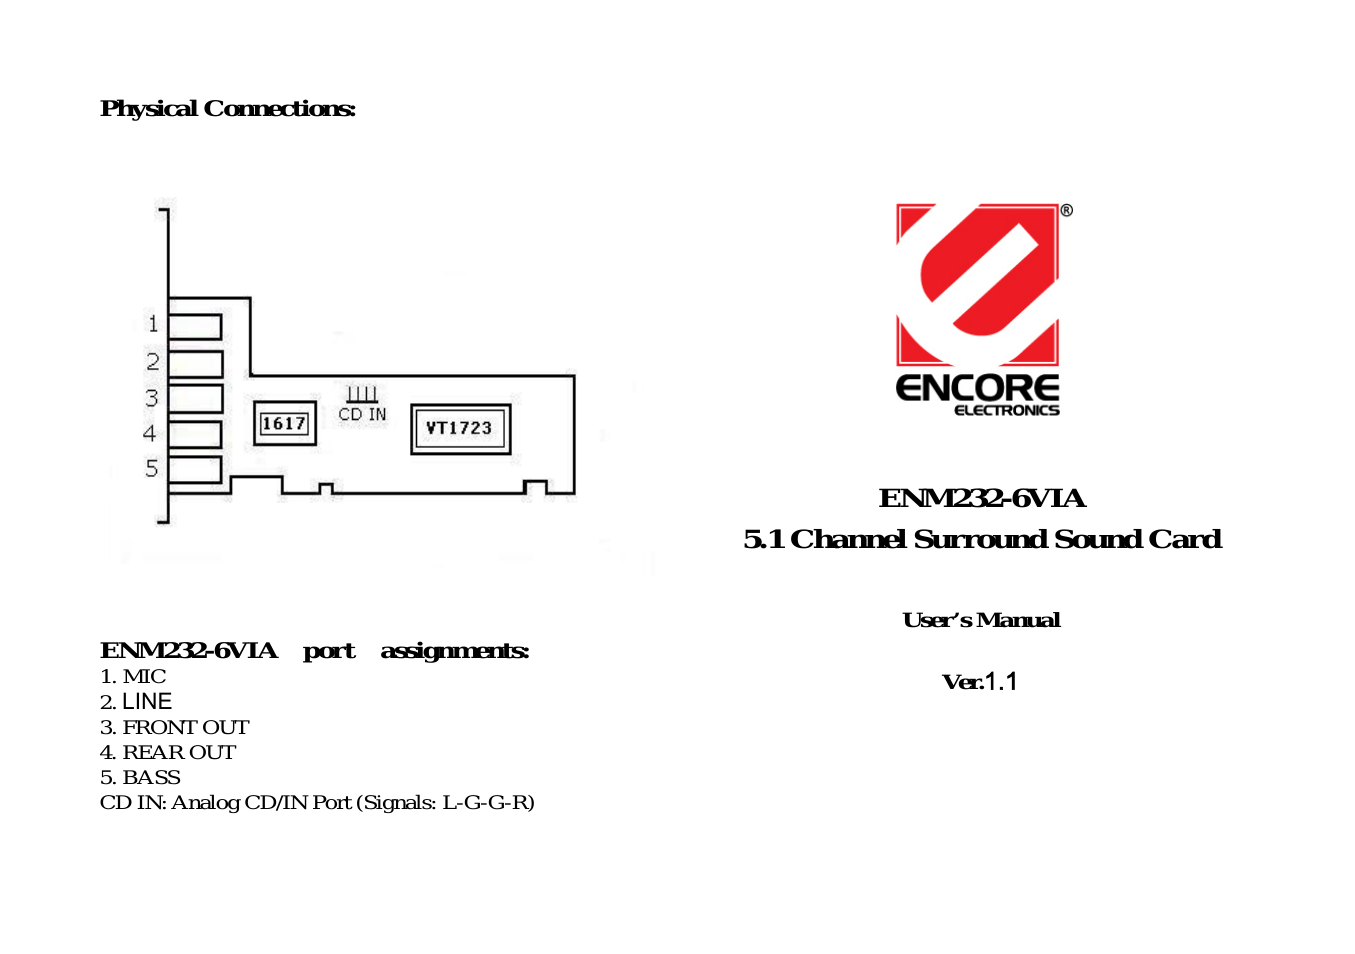 5.1 Channel Surround Sound Card ENM232-6VIA